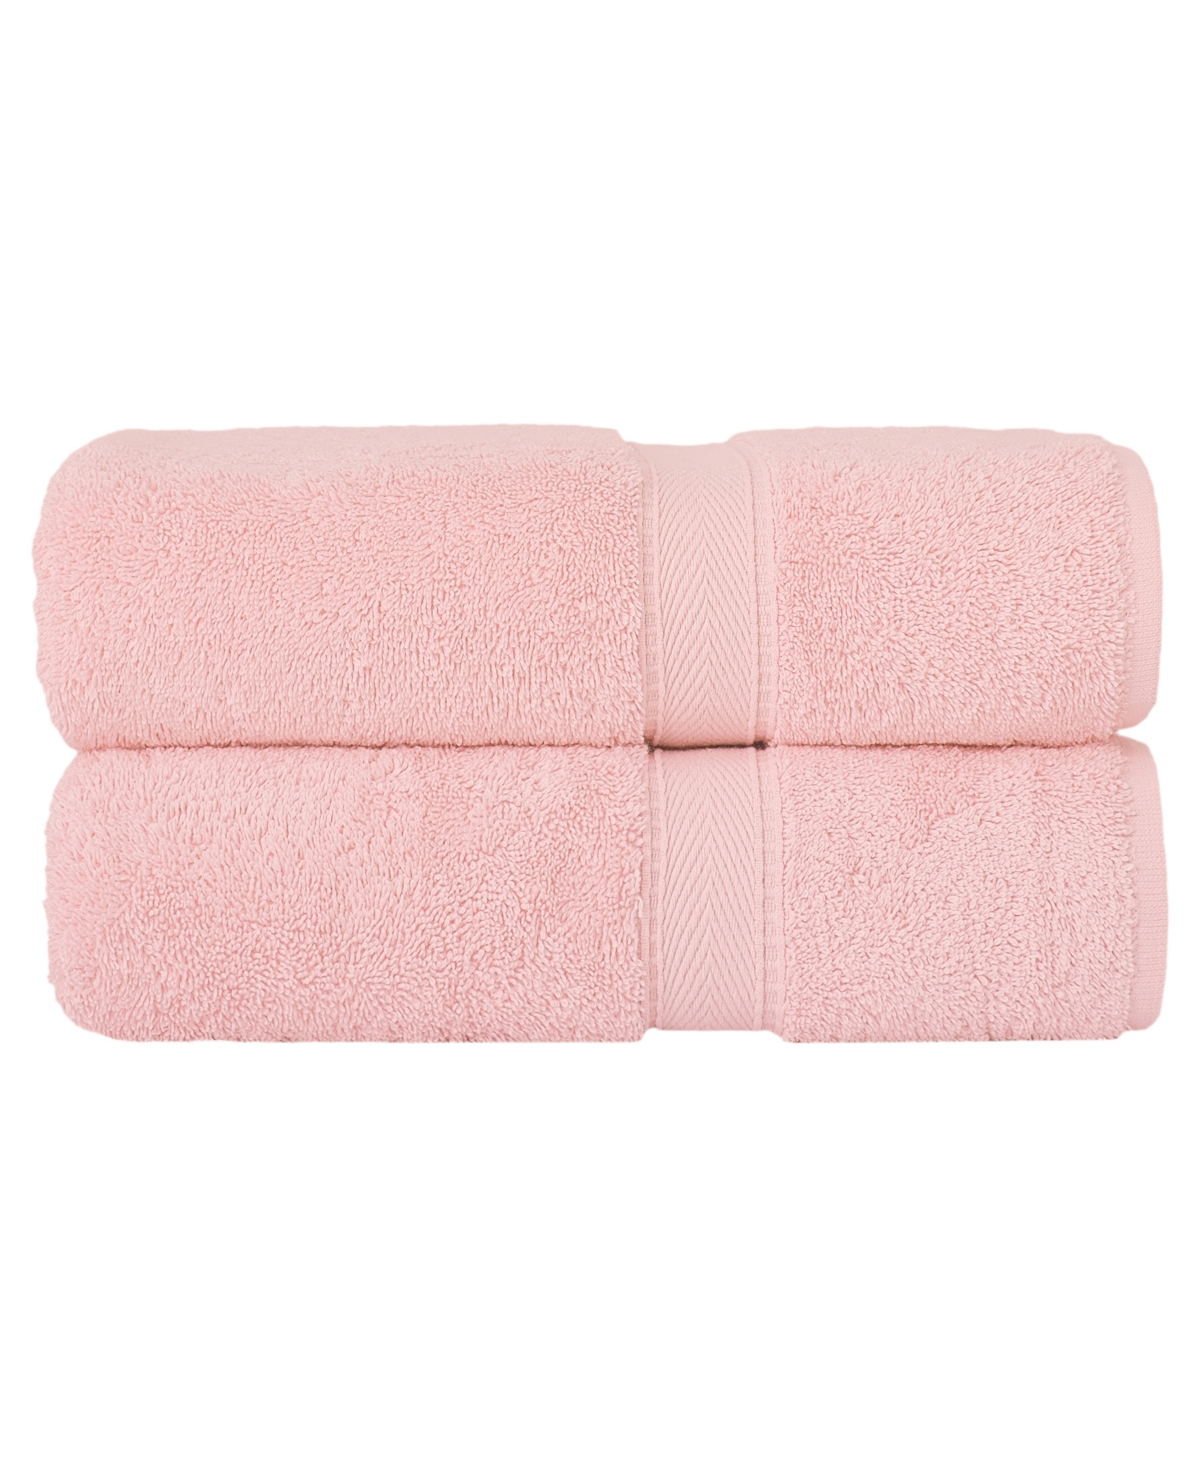 Linum Home Sinemis 2-pc. Bath Towel Set In Pink